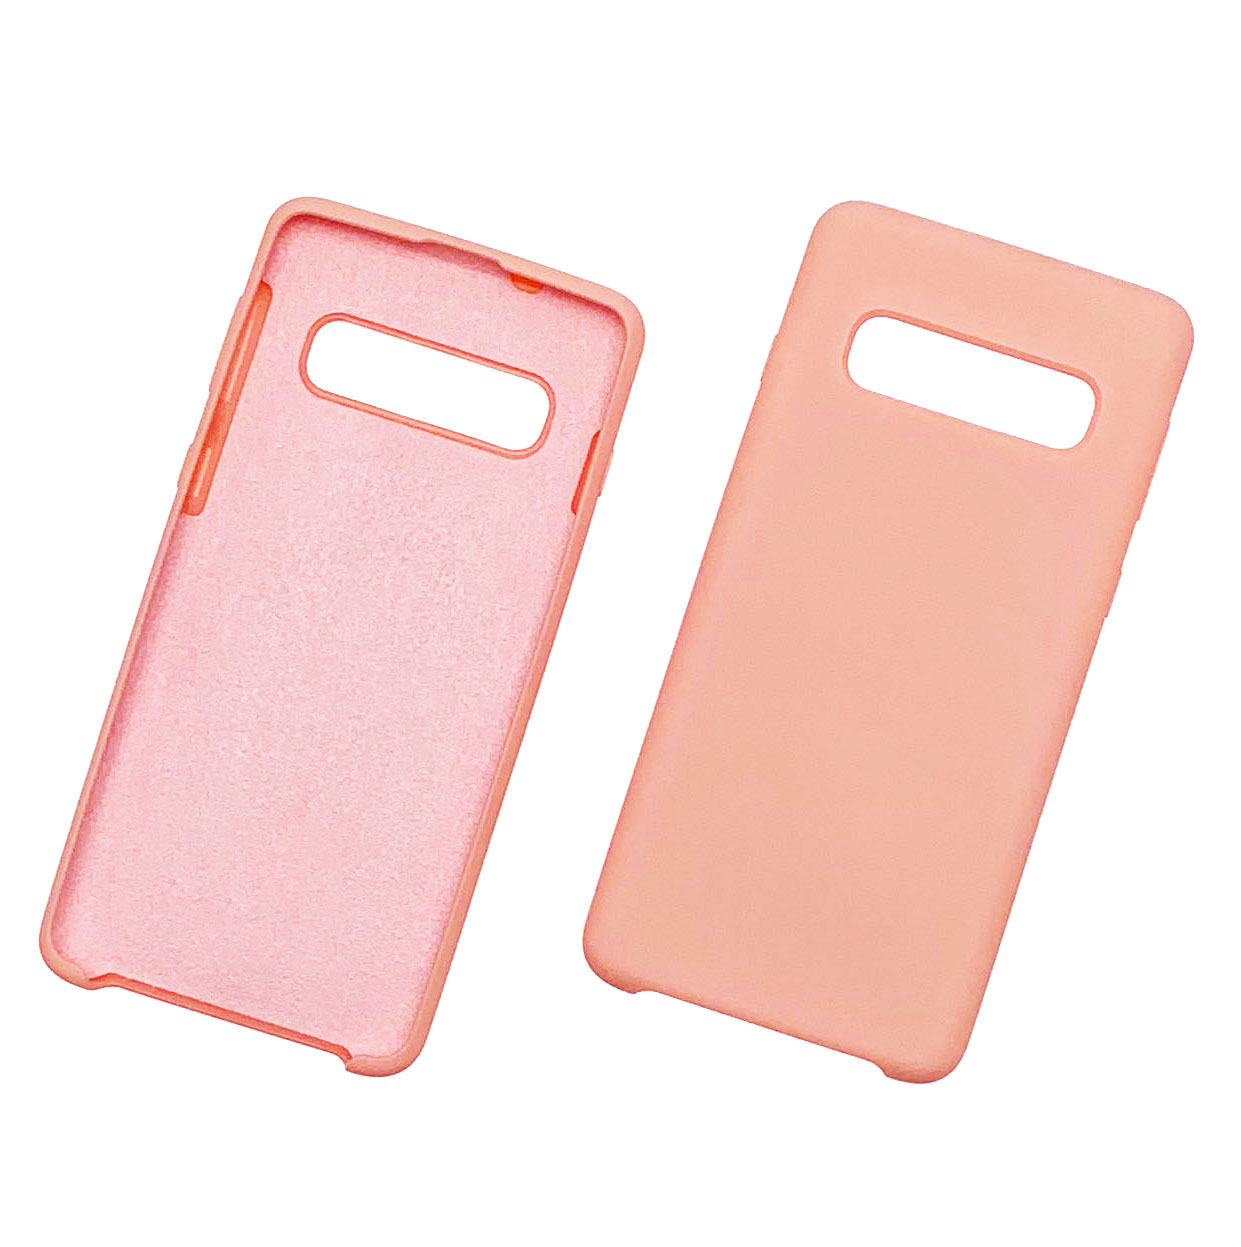 Чехол накладка Silicon Cover для SAMSUNG Galaxy S10 Plus (SM-G975), силикон, бархат, цвет светло розовый.